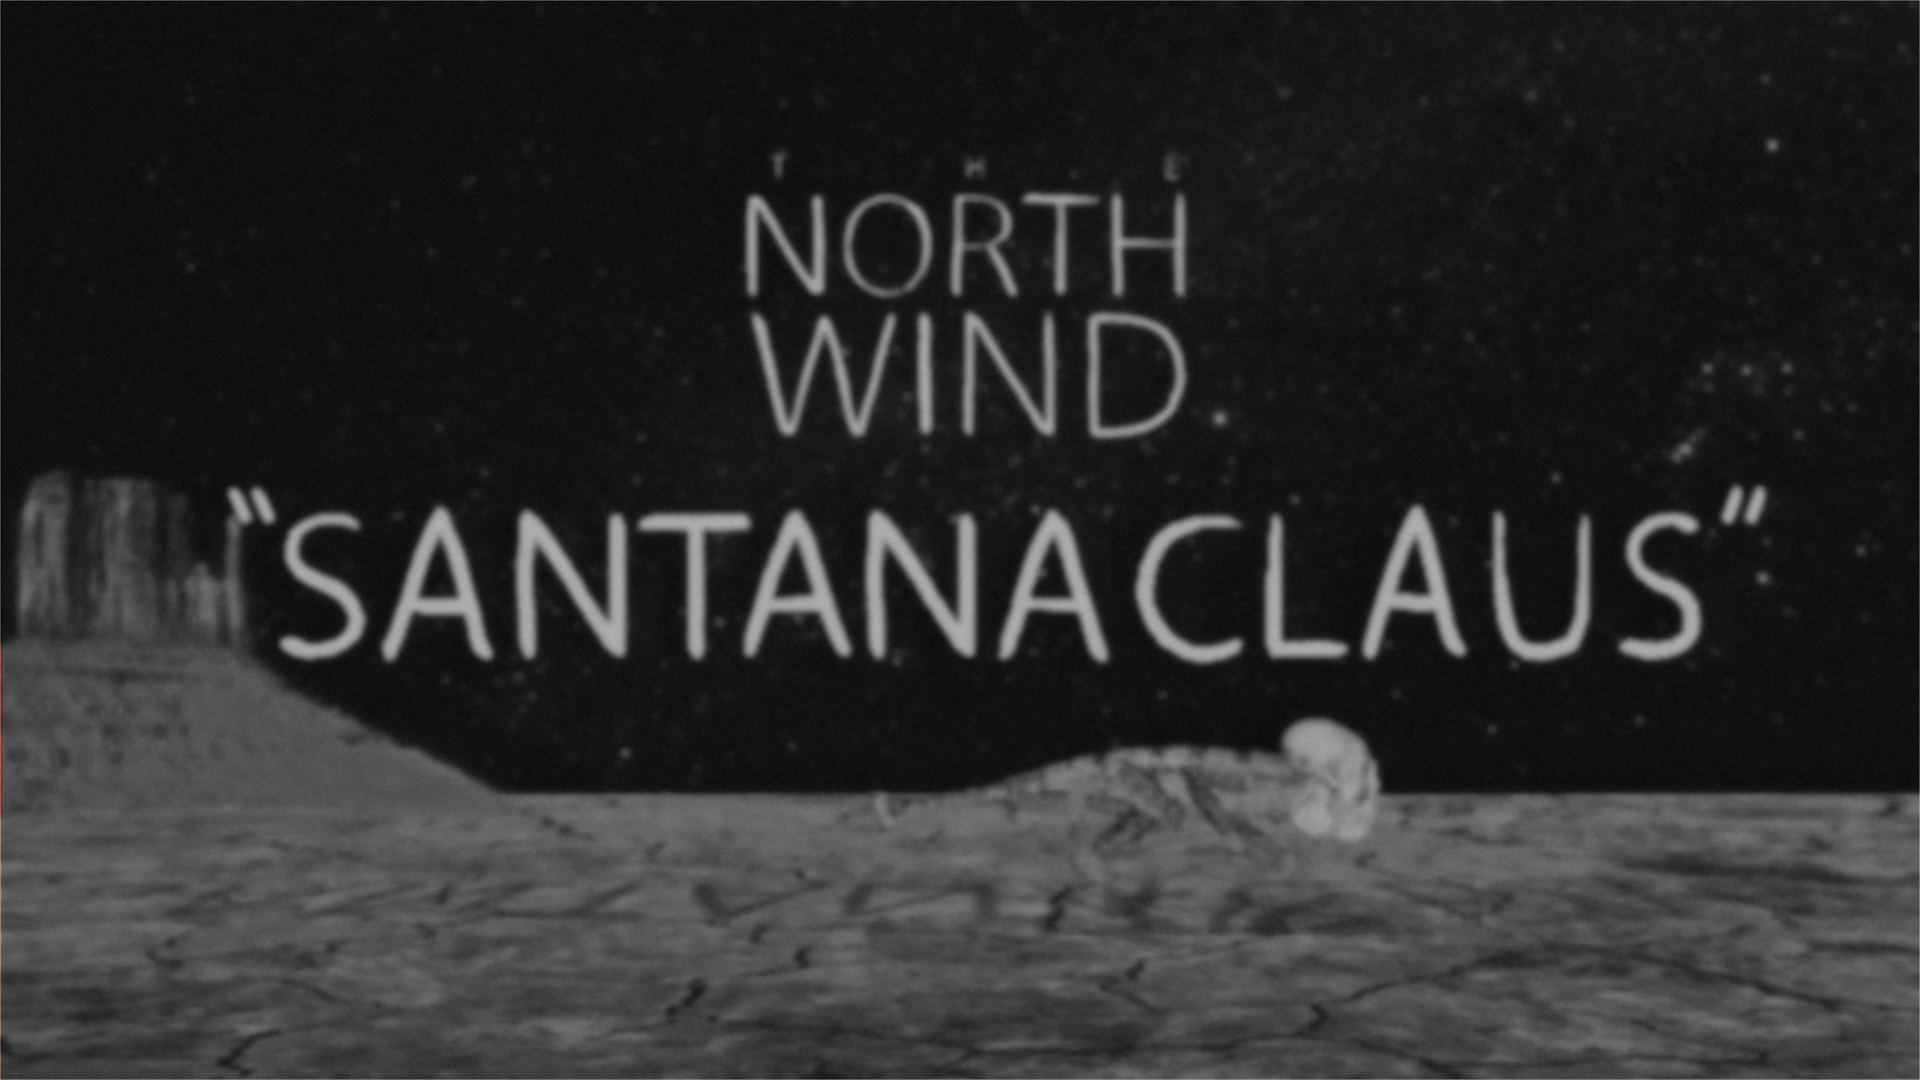 The North Wind "Santana Claus"